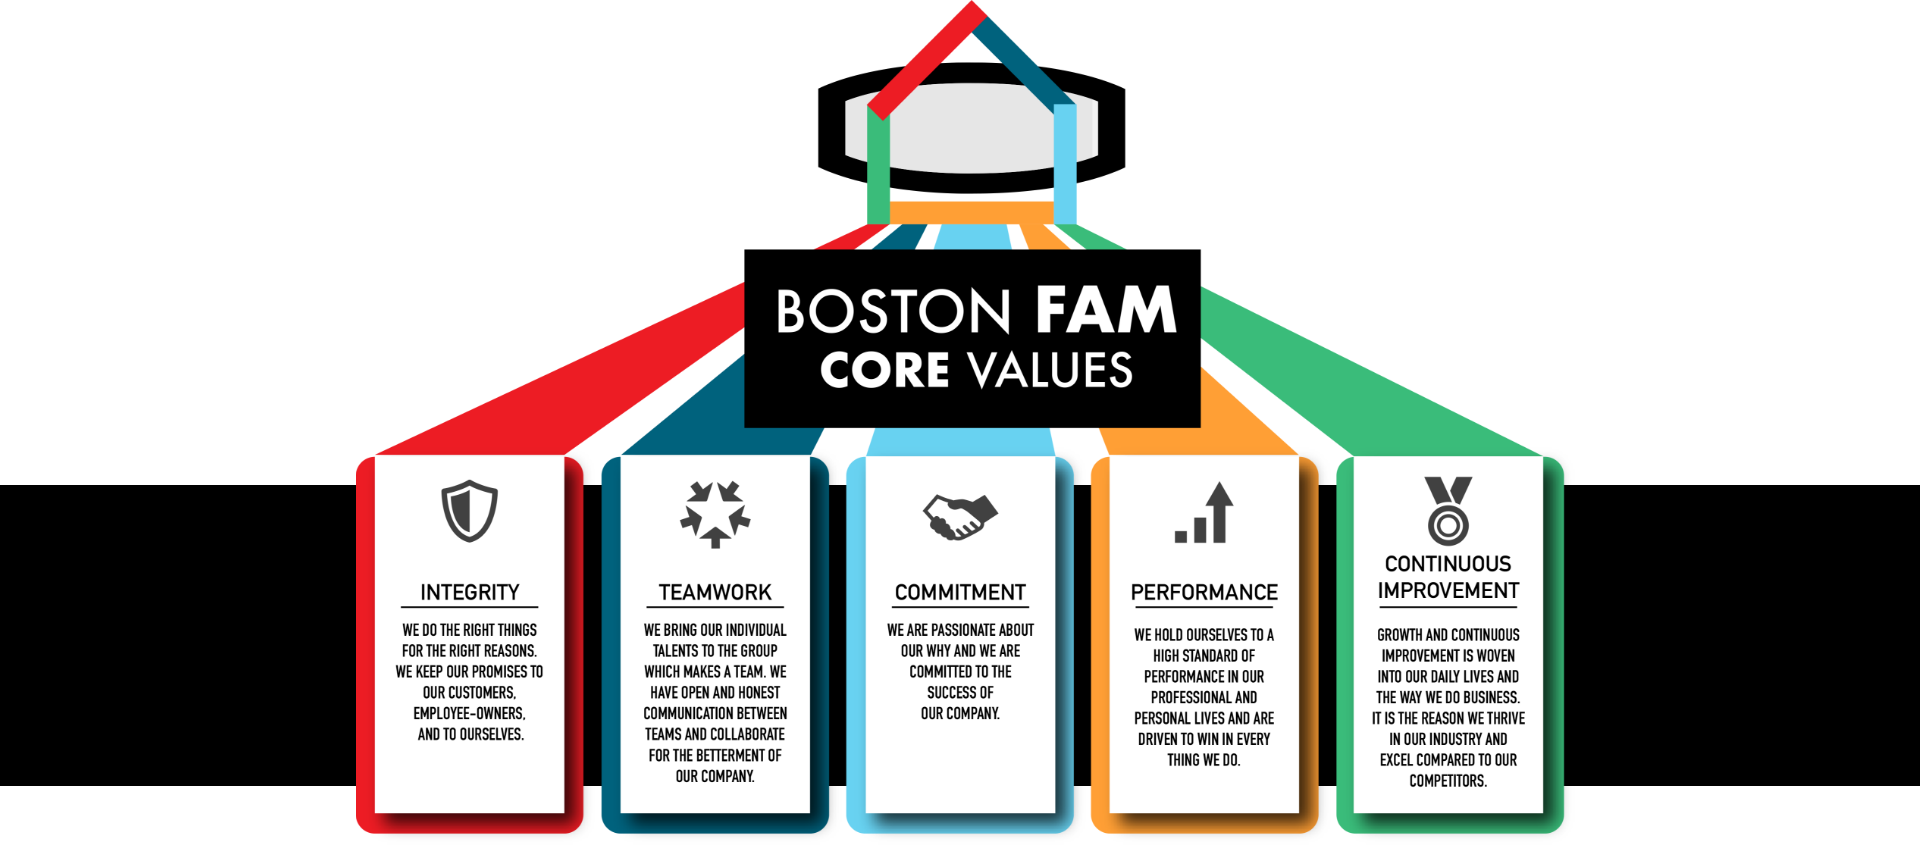 Boston FAM Core Values - Integrity, Teamwork, Commitment, Performance, Continuous Improvement